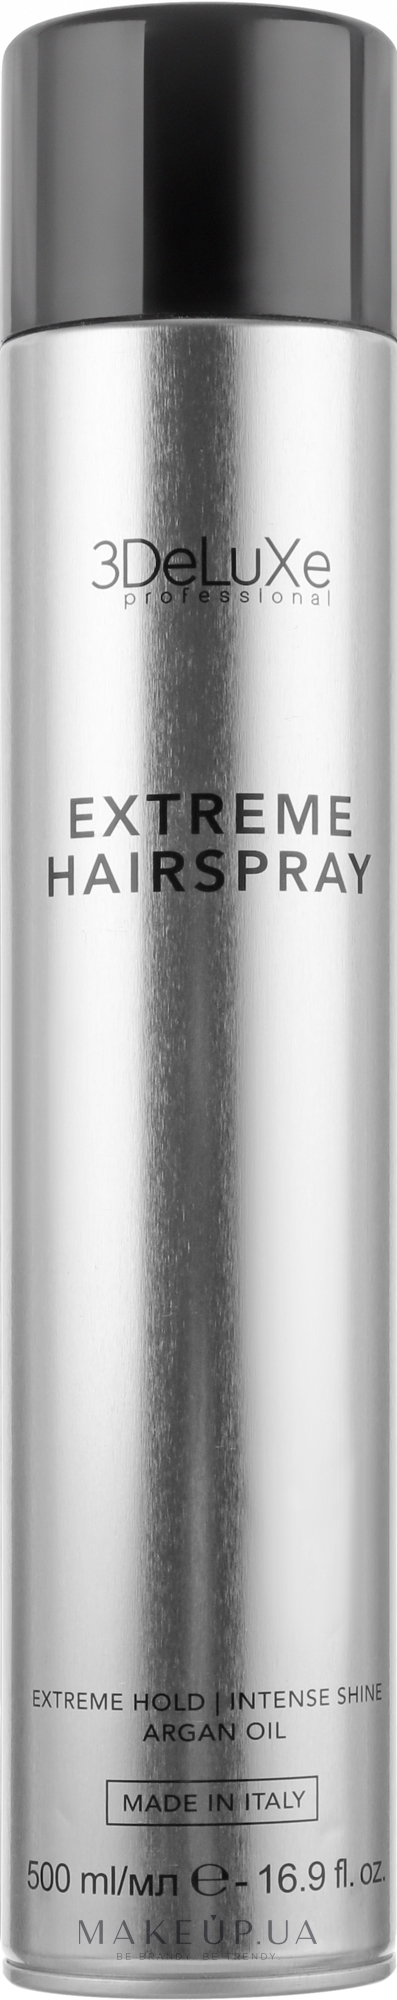 Лак екстрасильної фіксації - 3DeLuXe Extreme Hairspray — фото 500ml